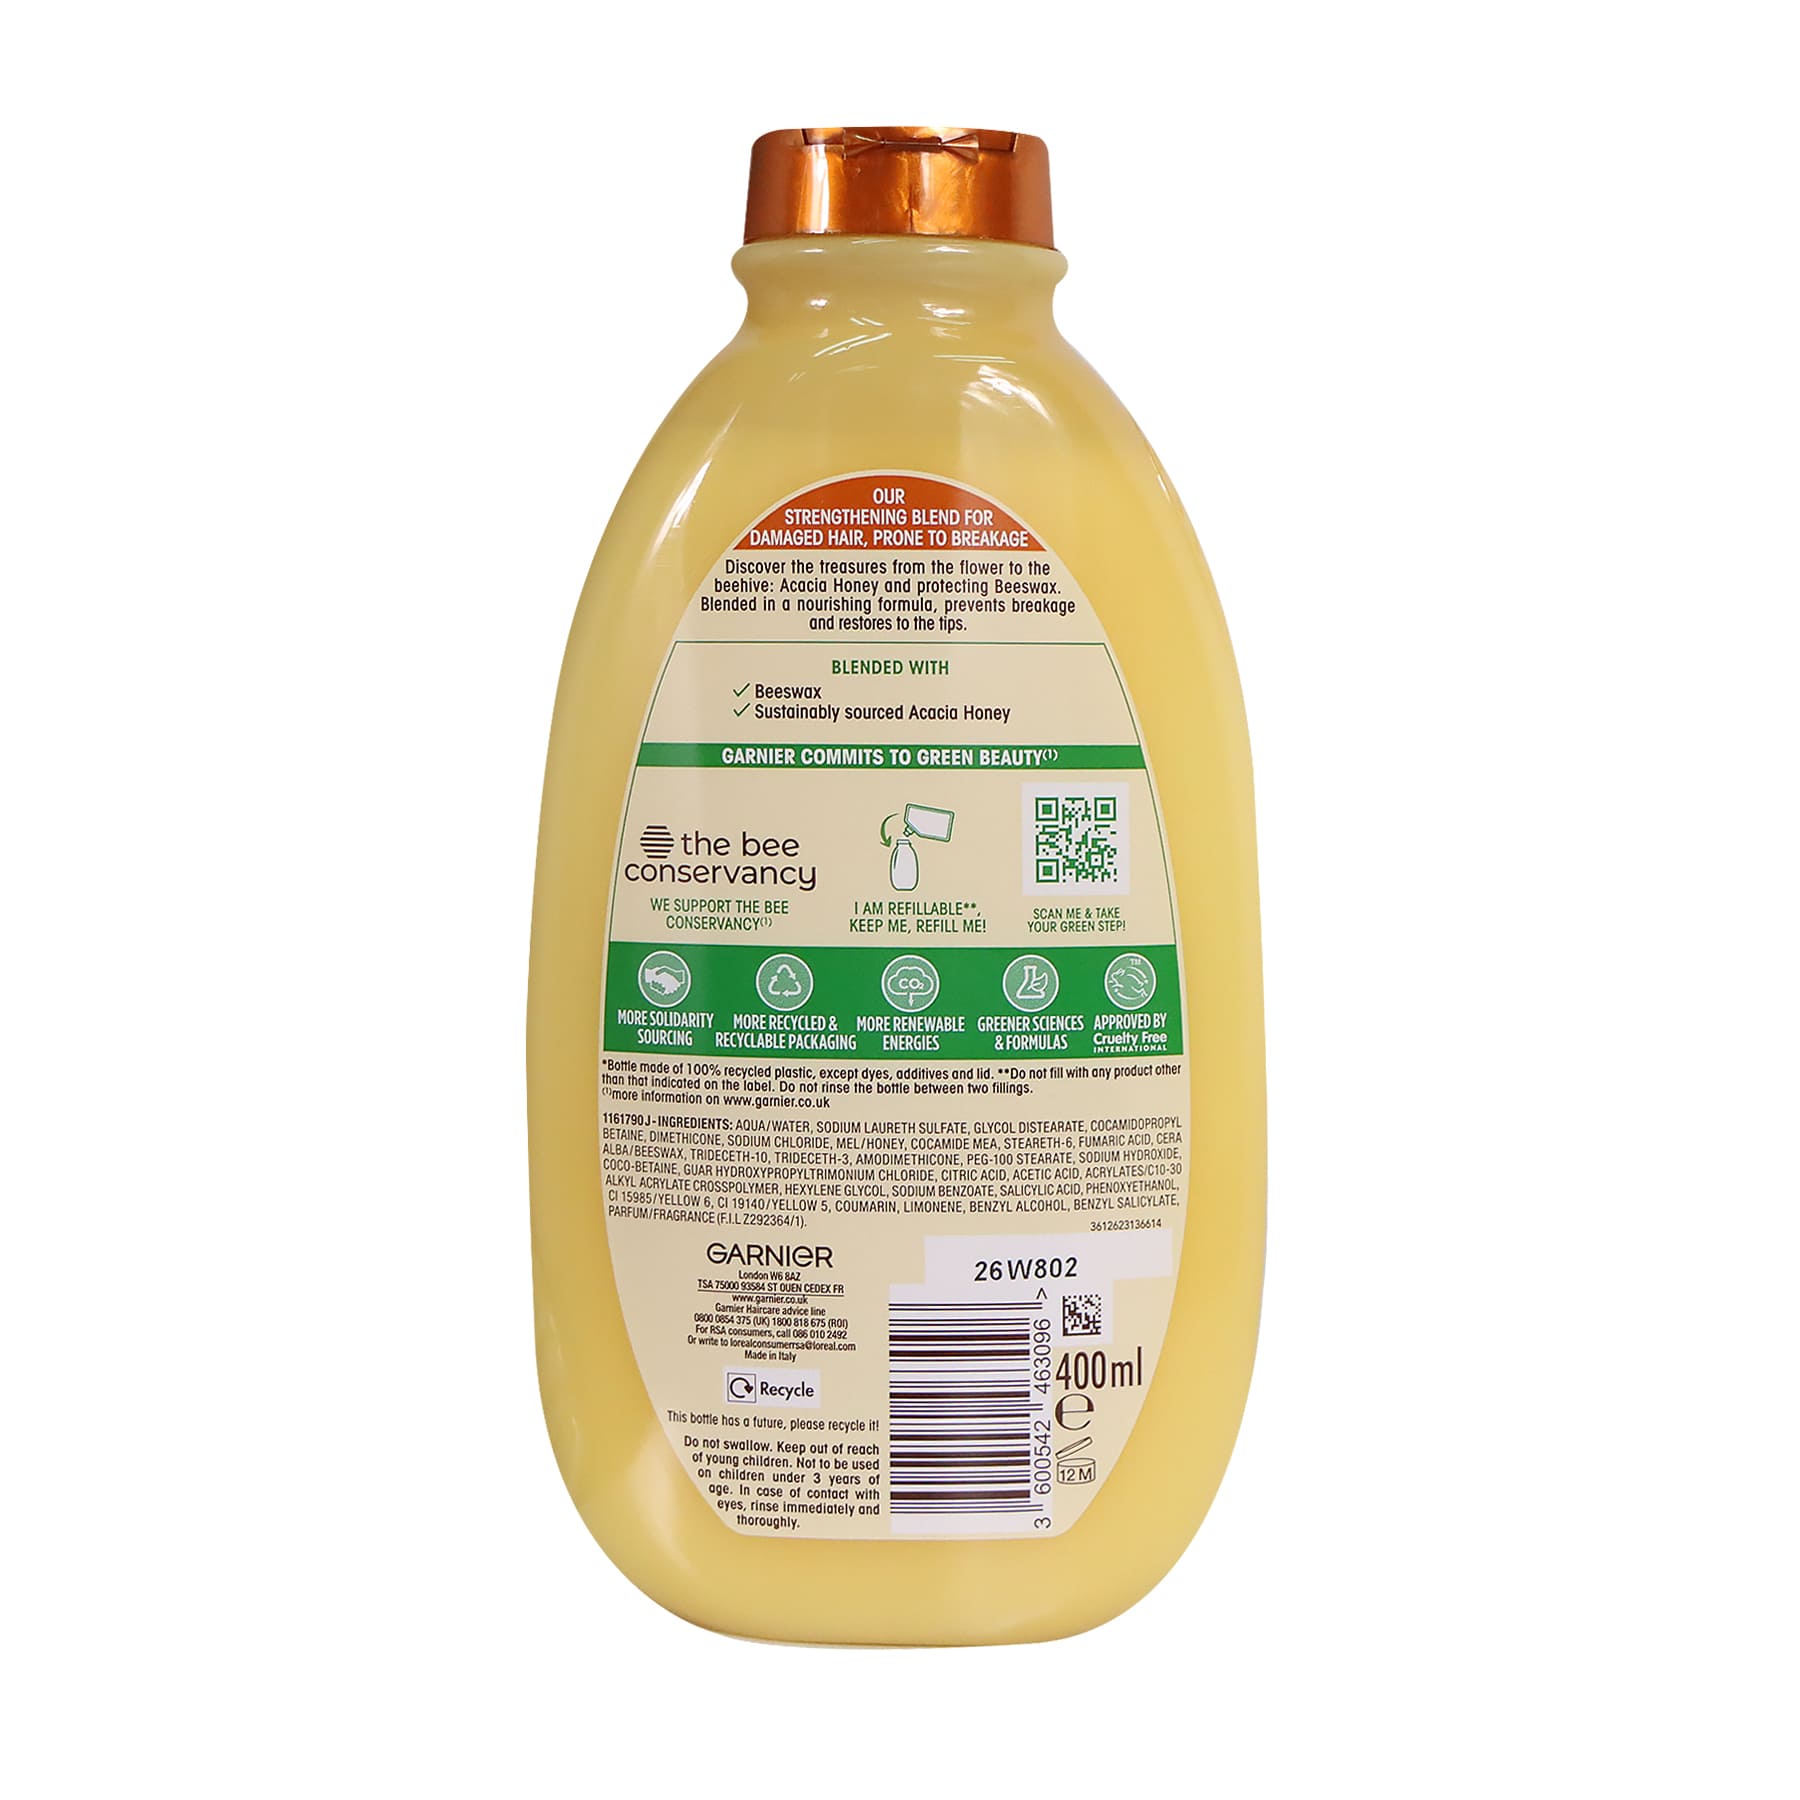 Garnier Ultimate Blends Honey Treasures Shampoo 400ml